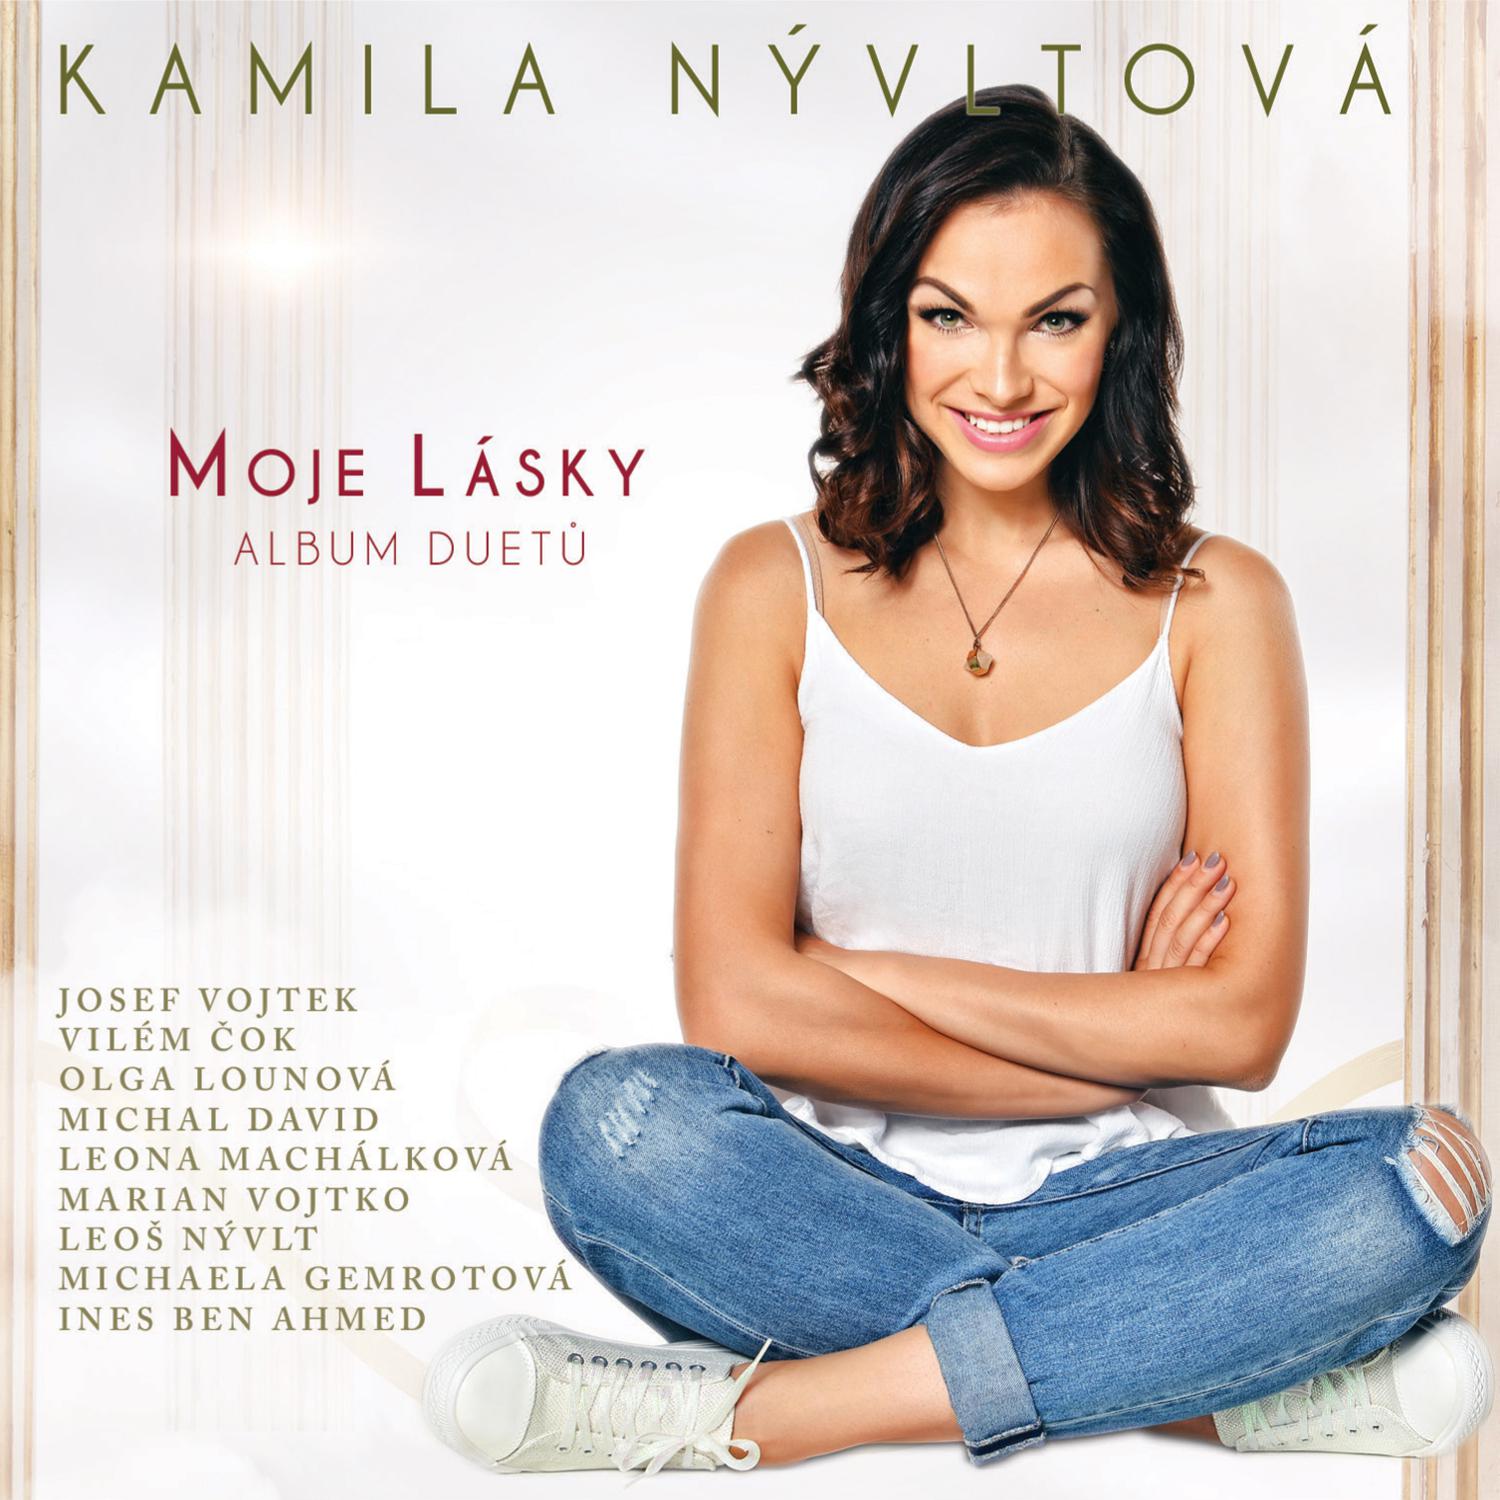 CD Shop - NYVLTOVA KAMILA MOJE LASKY